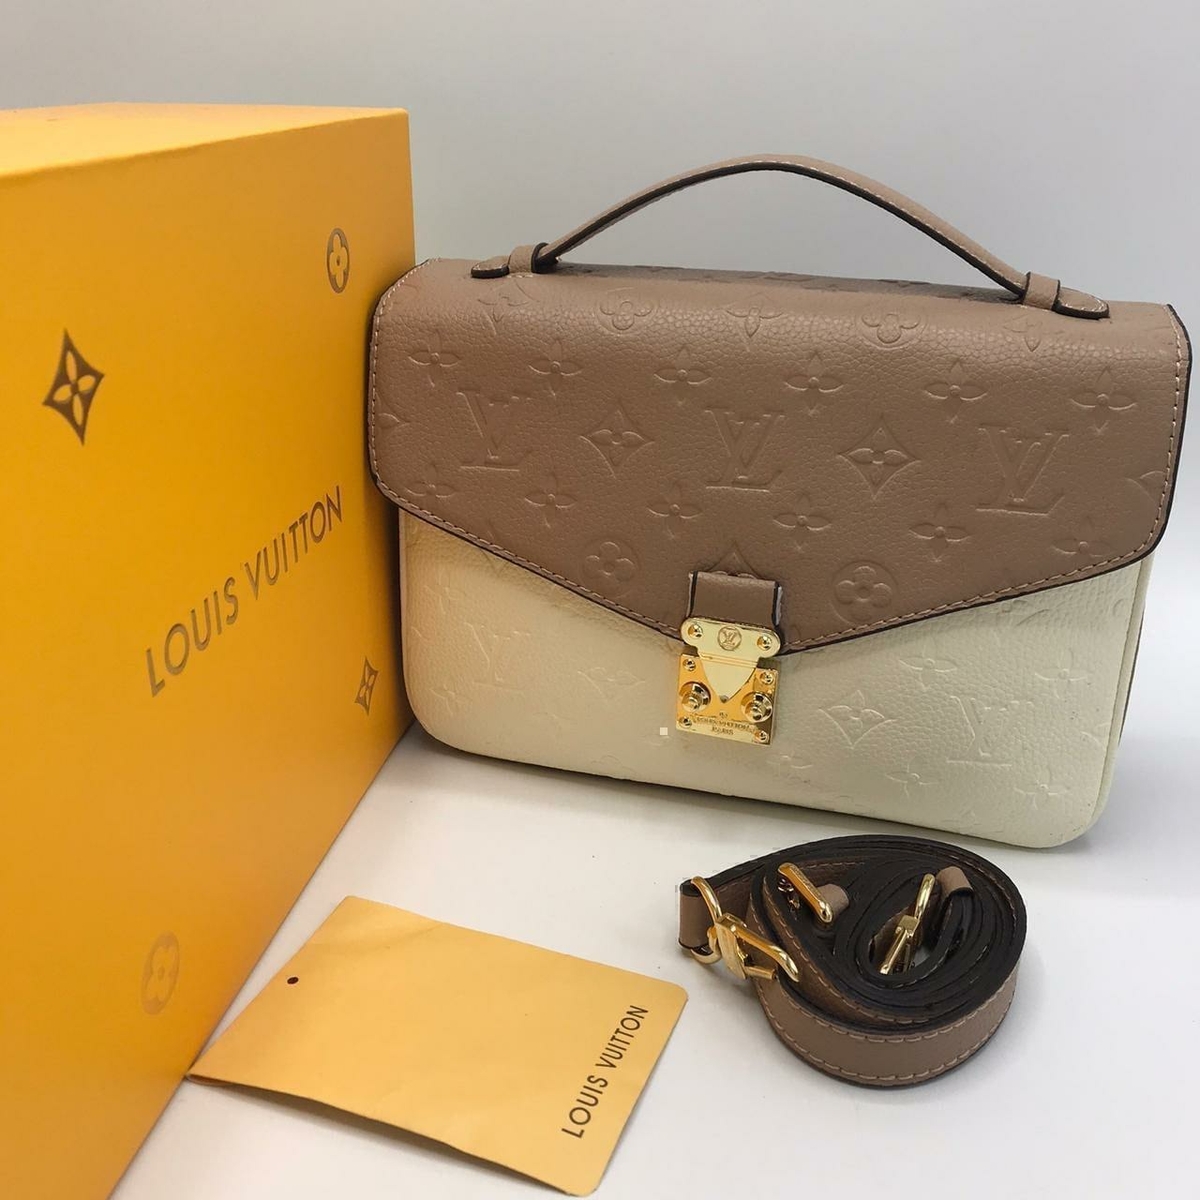 Louis Vuitton сумка #1 в «Globestyle» арт.5337TG